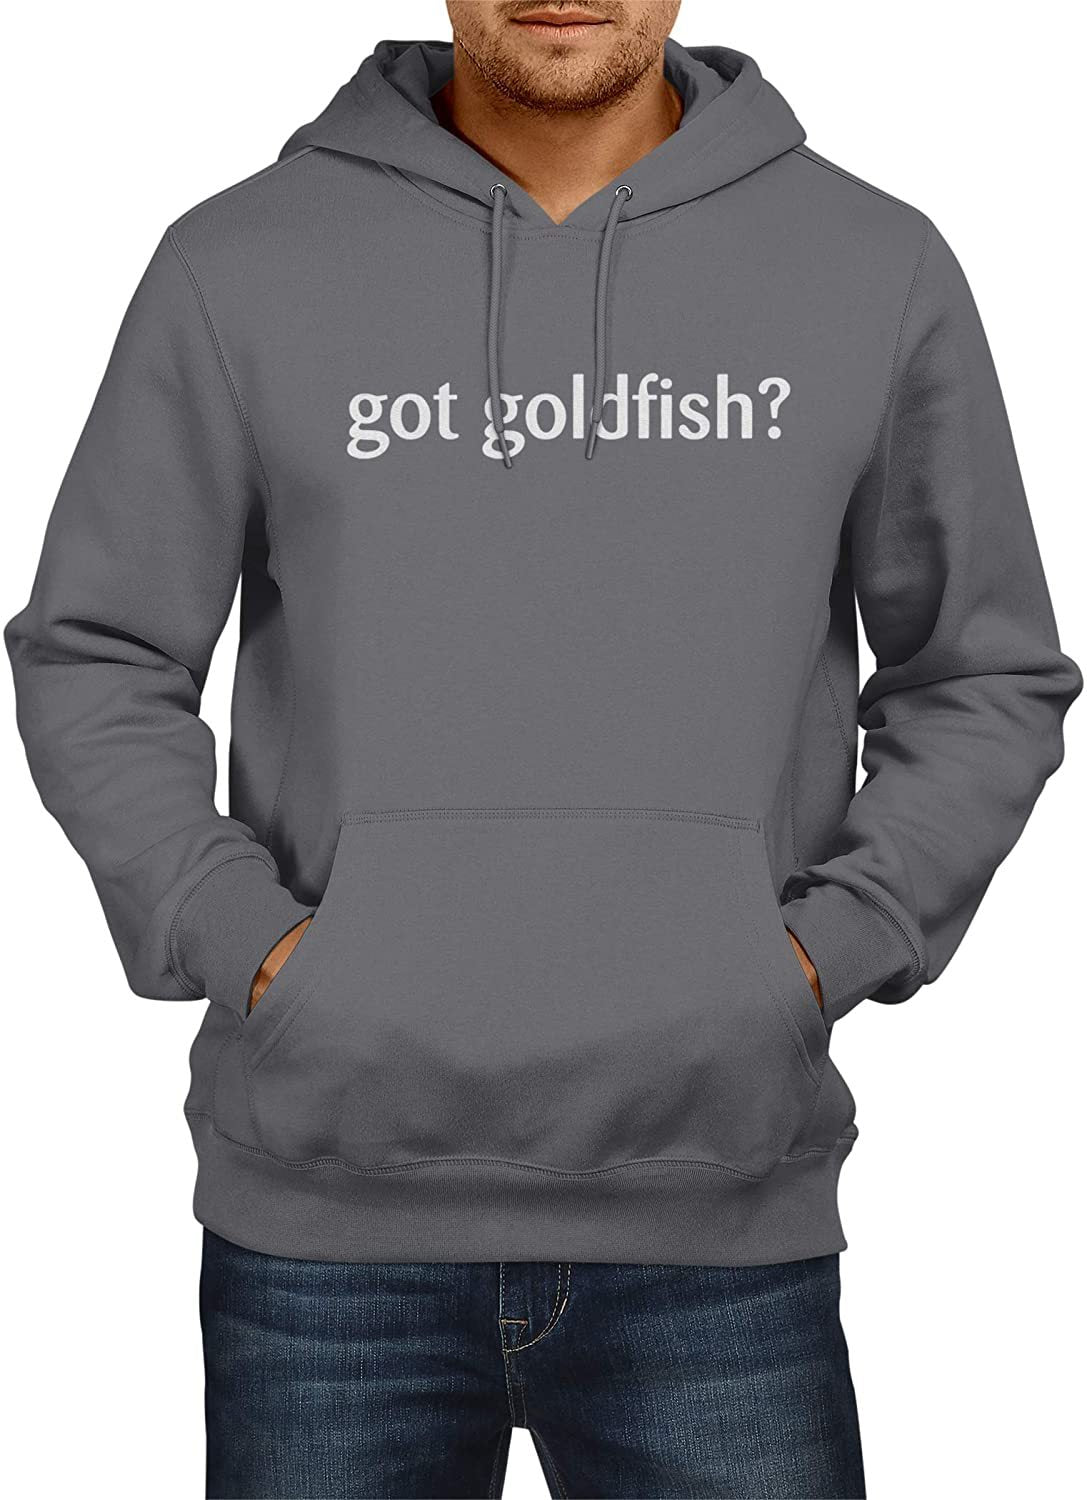 NXY Men's Got Goldfish Hoodie Sweatshirt